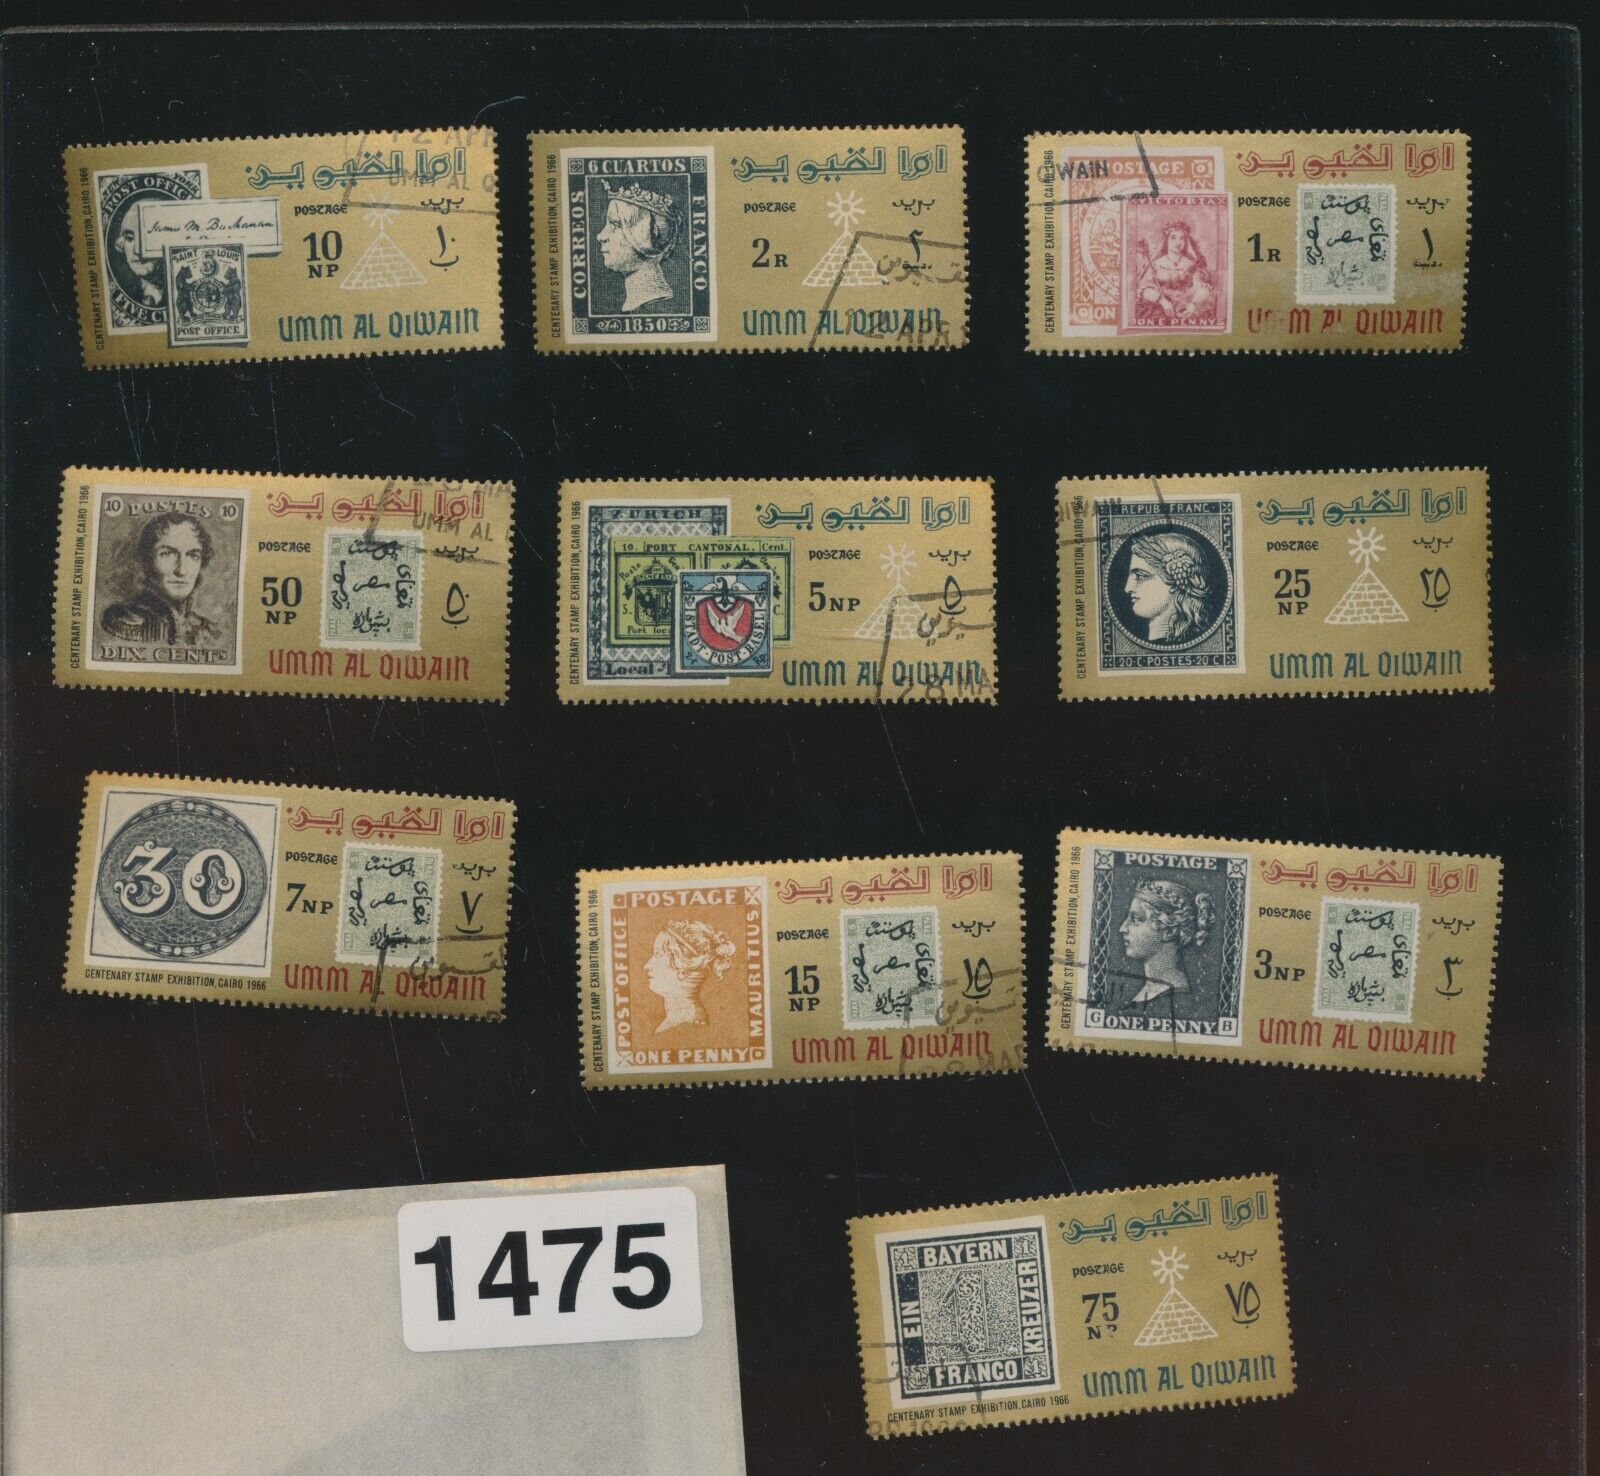 Um Alqiwain - Stamp On Stamp Set (10) - #1475